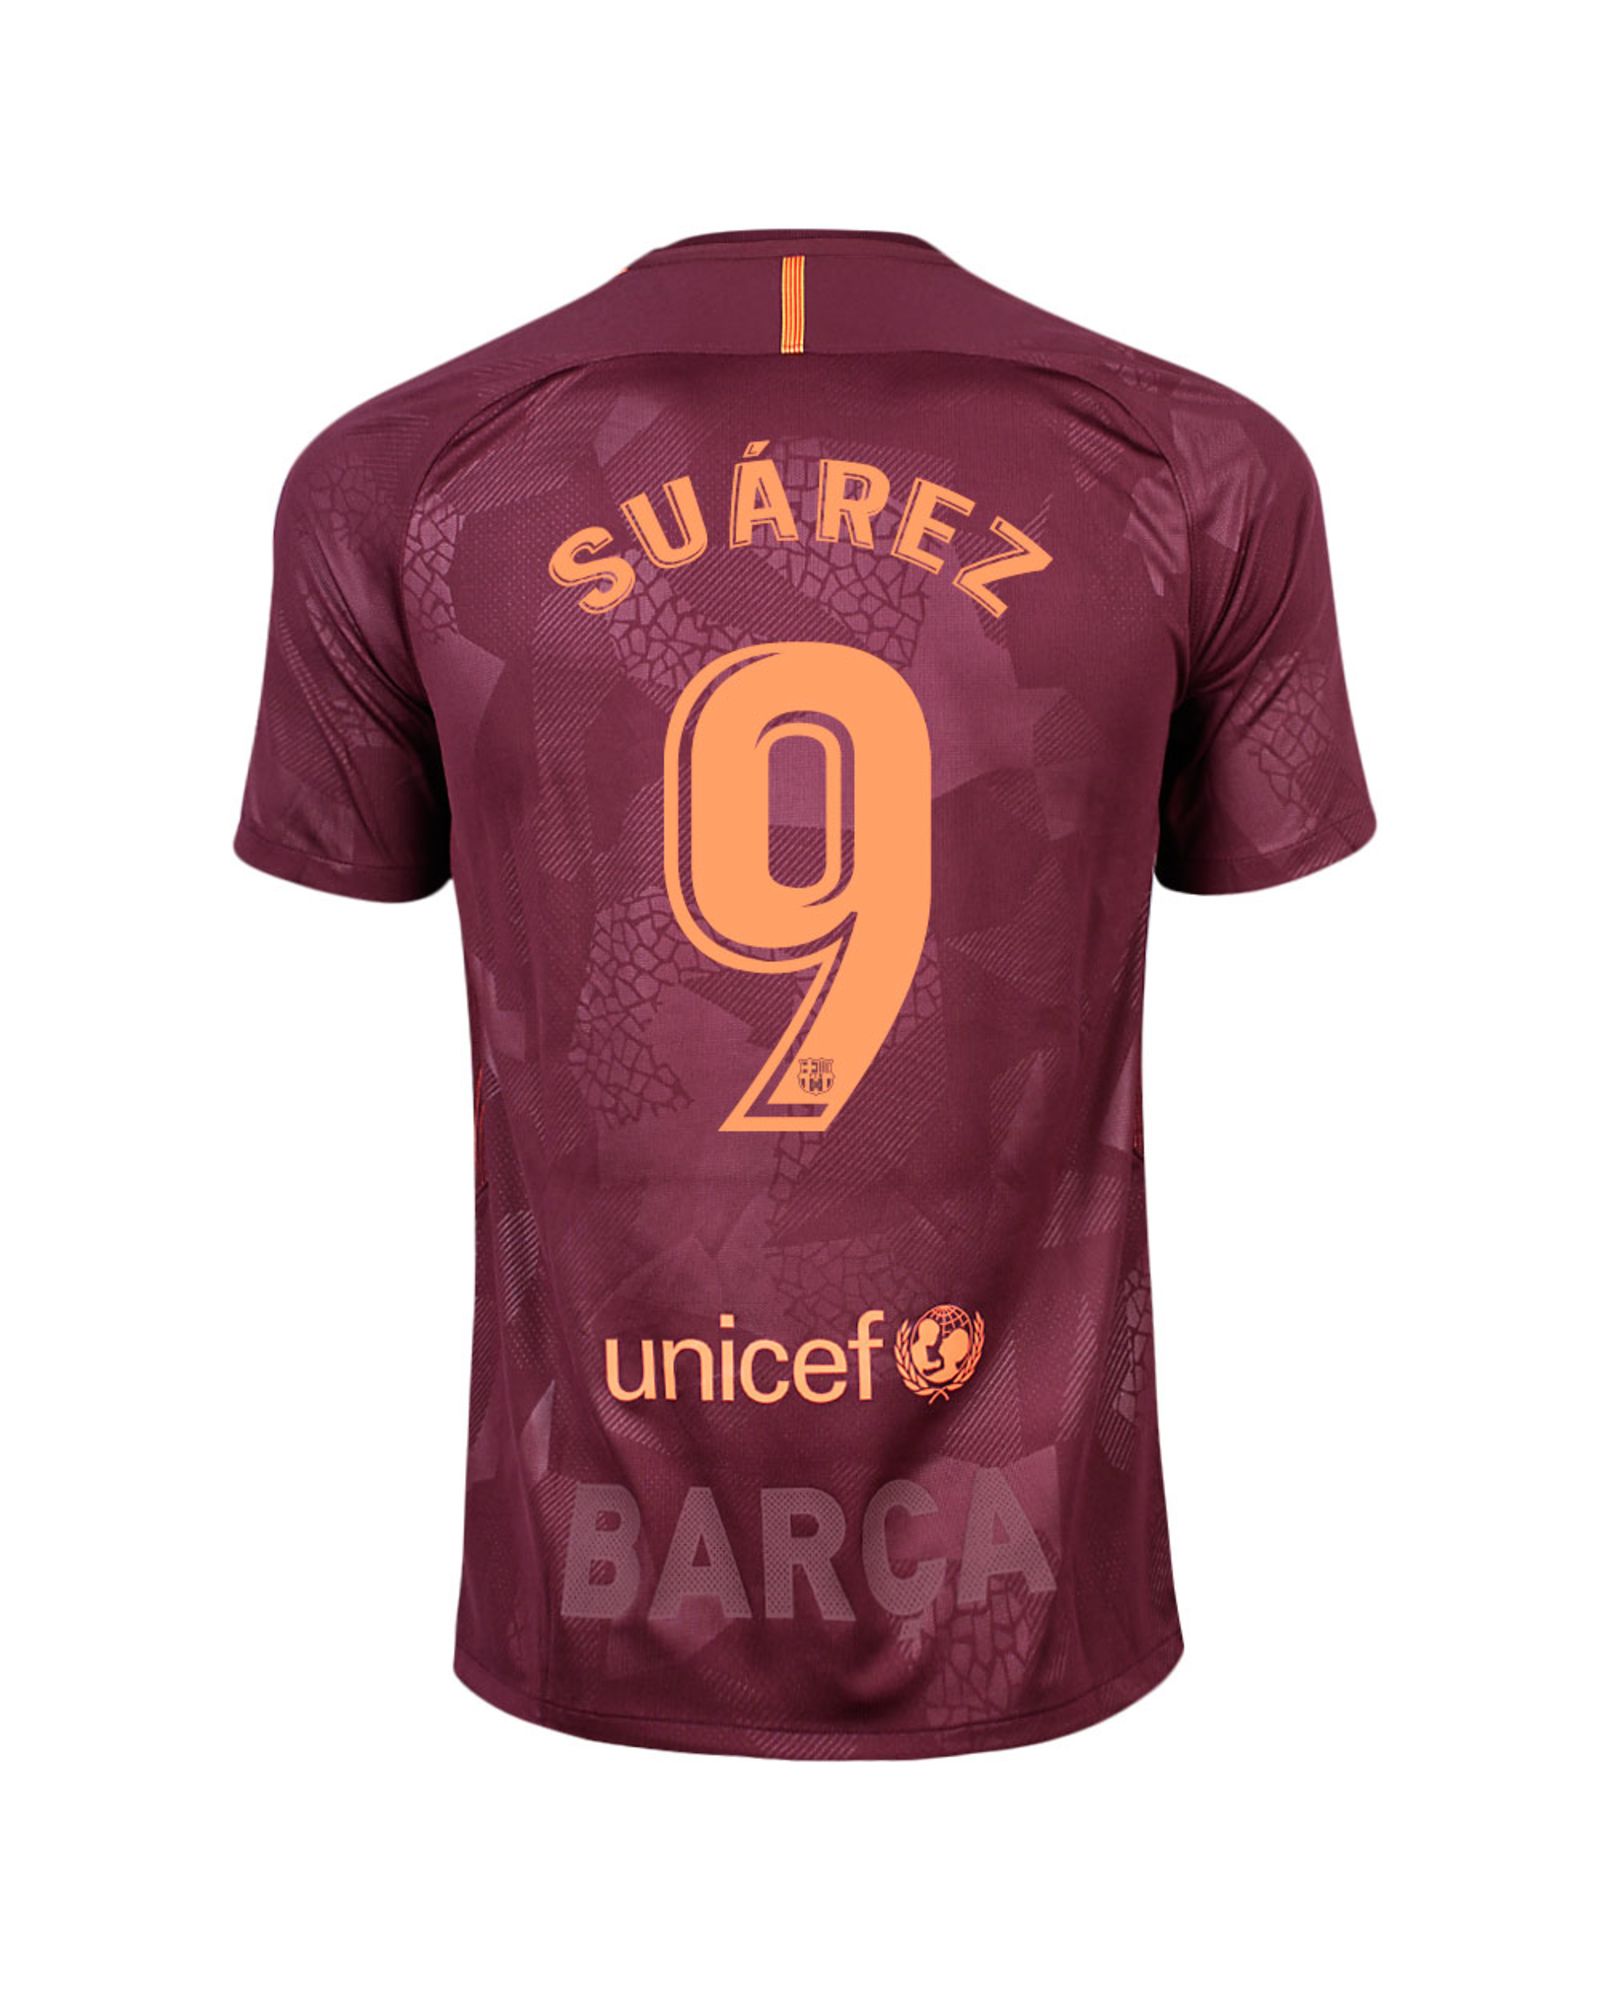 Camiseta 3ª FC Barcelona 2017/2018 Suárez Granate - Fútbol Factory